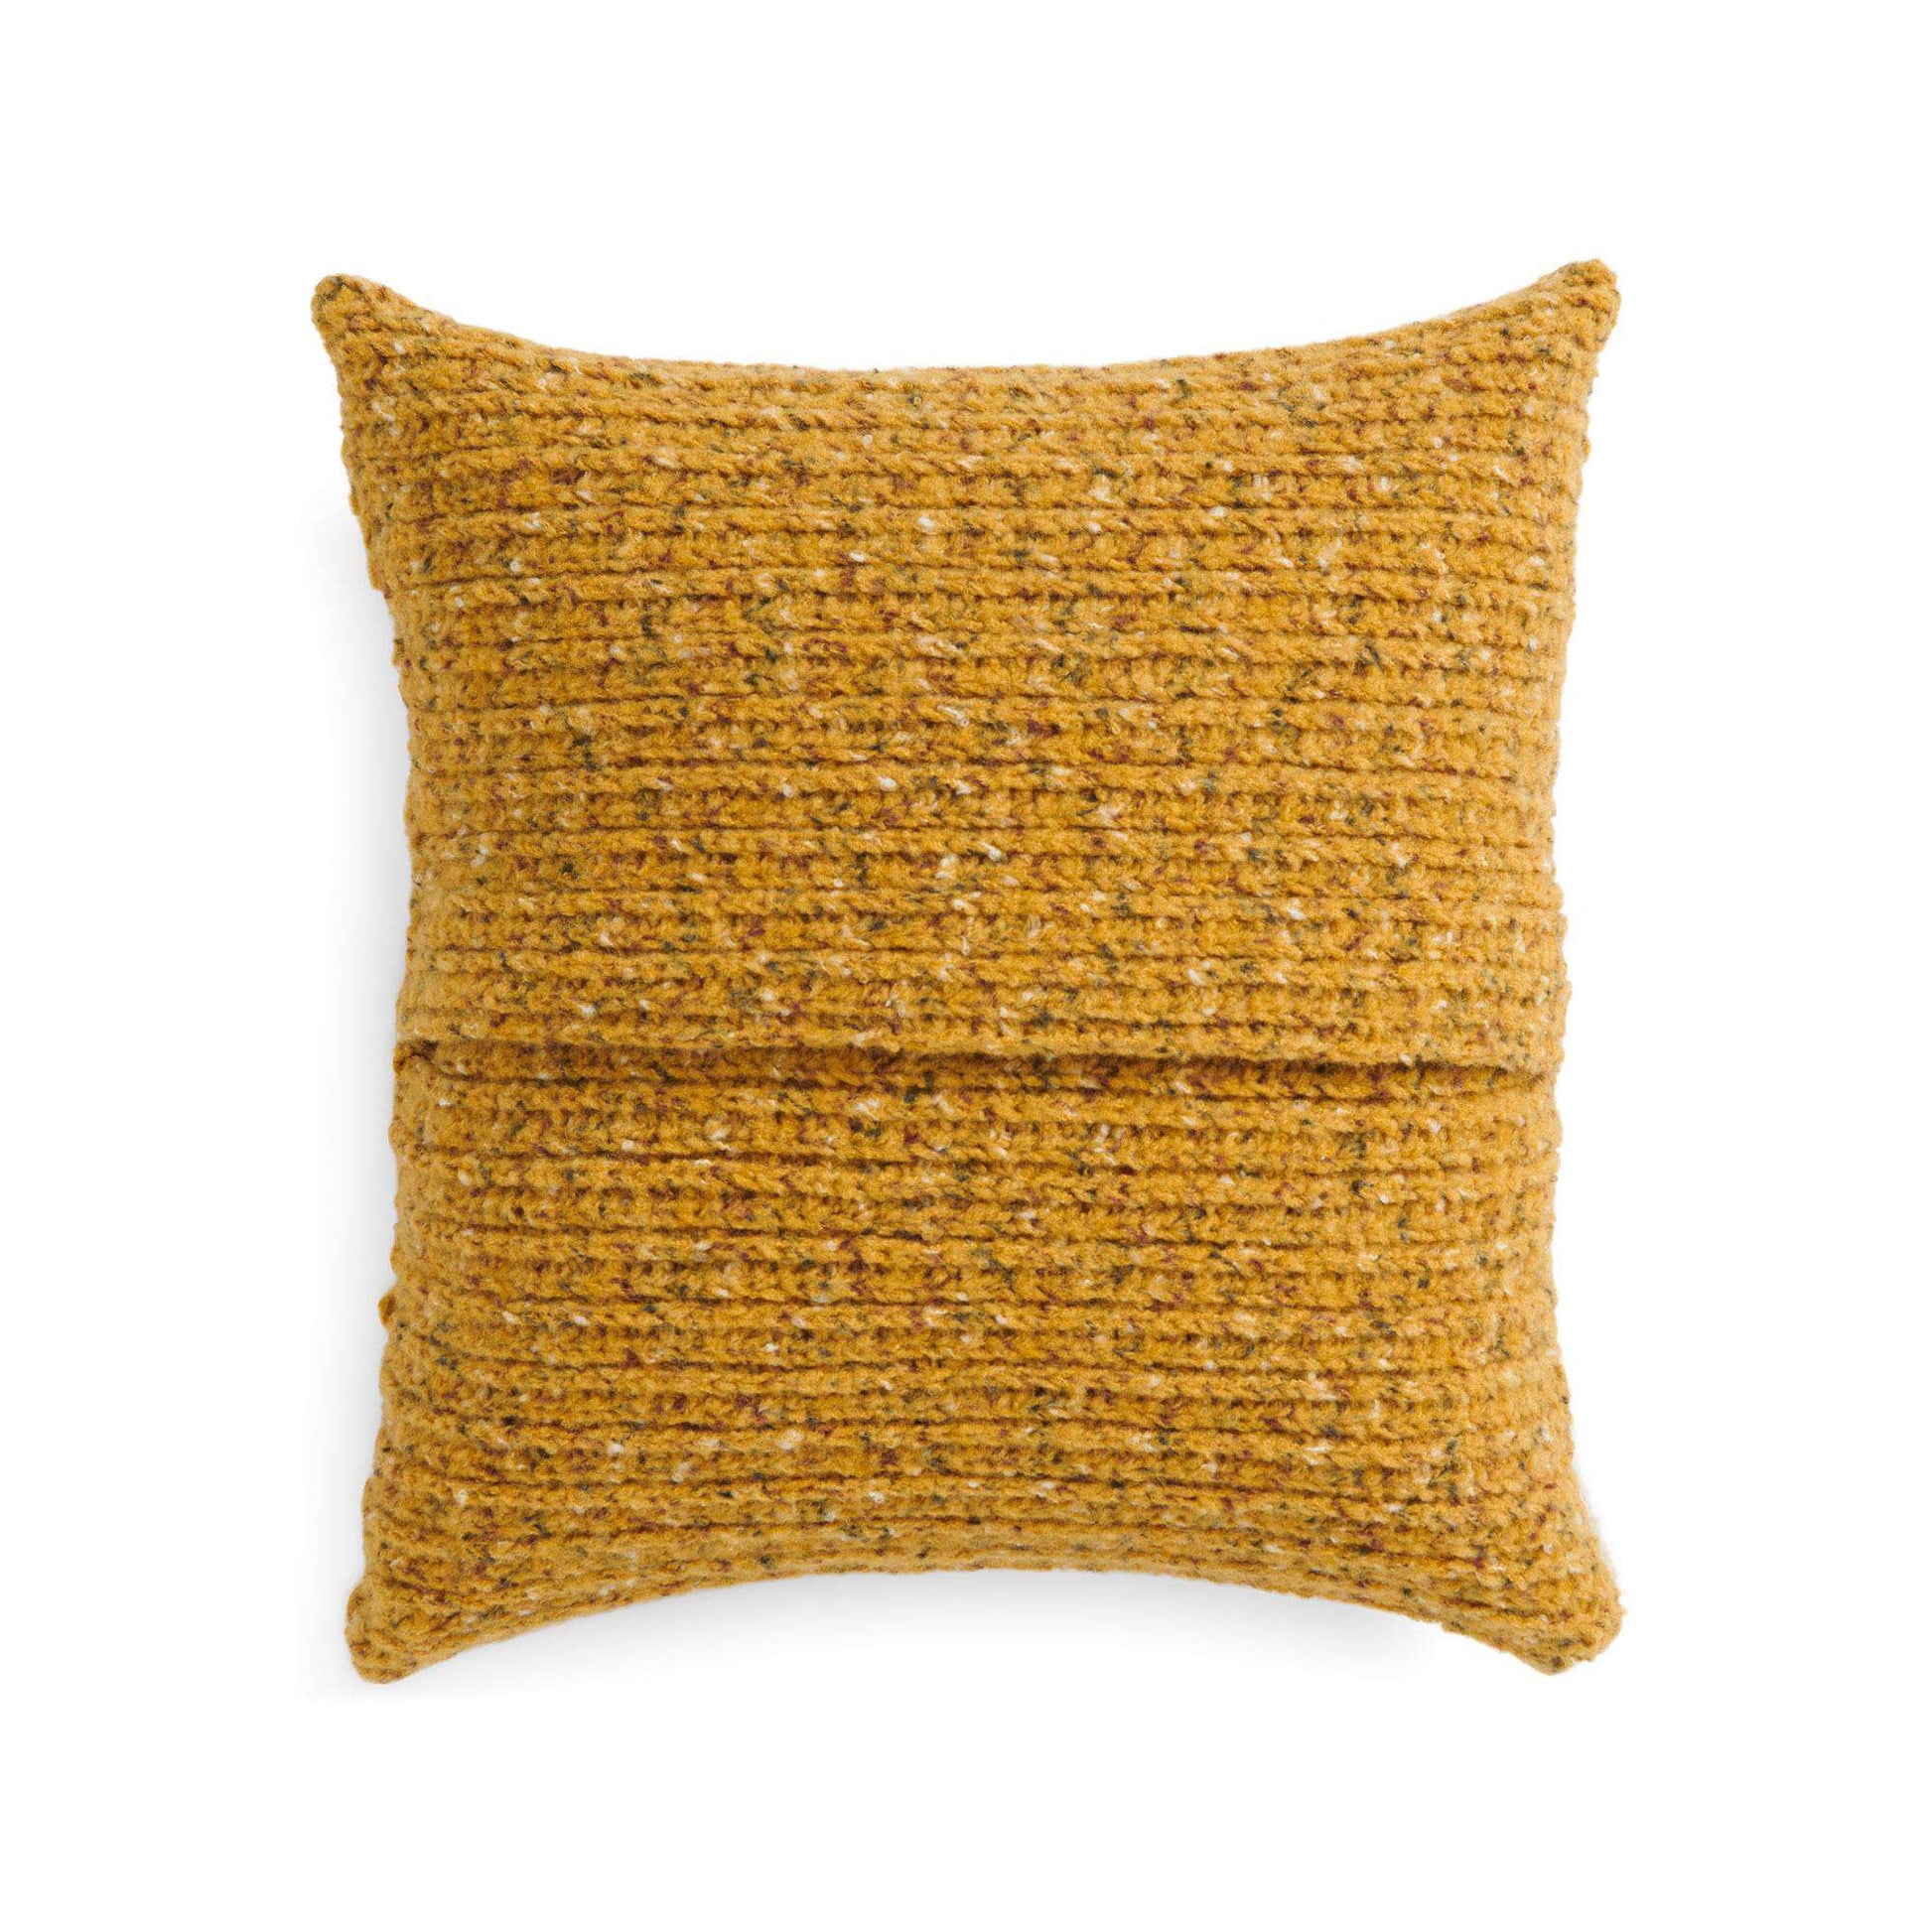 Free Bernat Felted Crochet Corrugated Pillow Cover Pattern